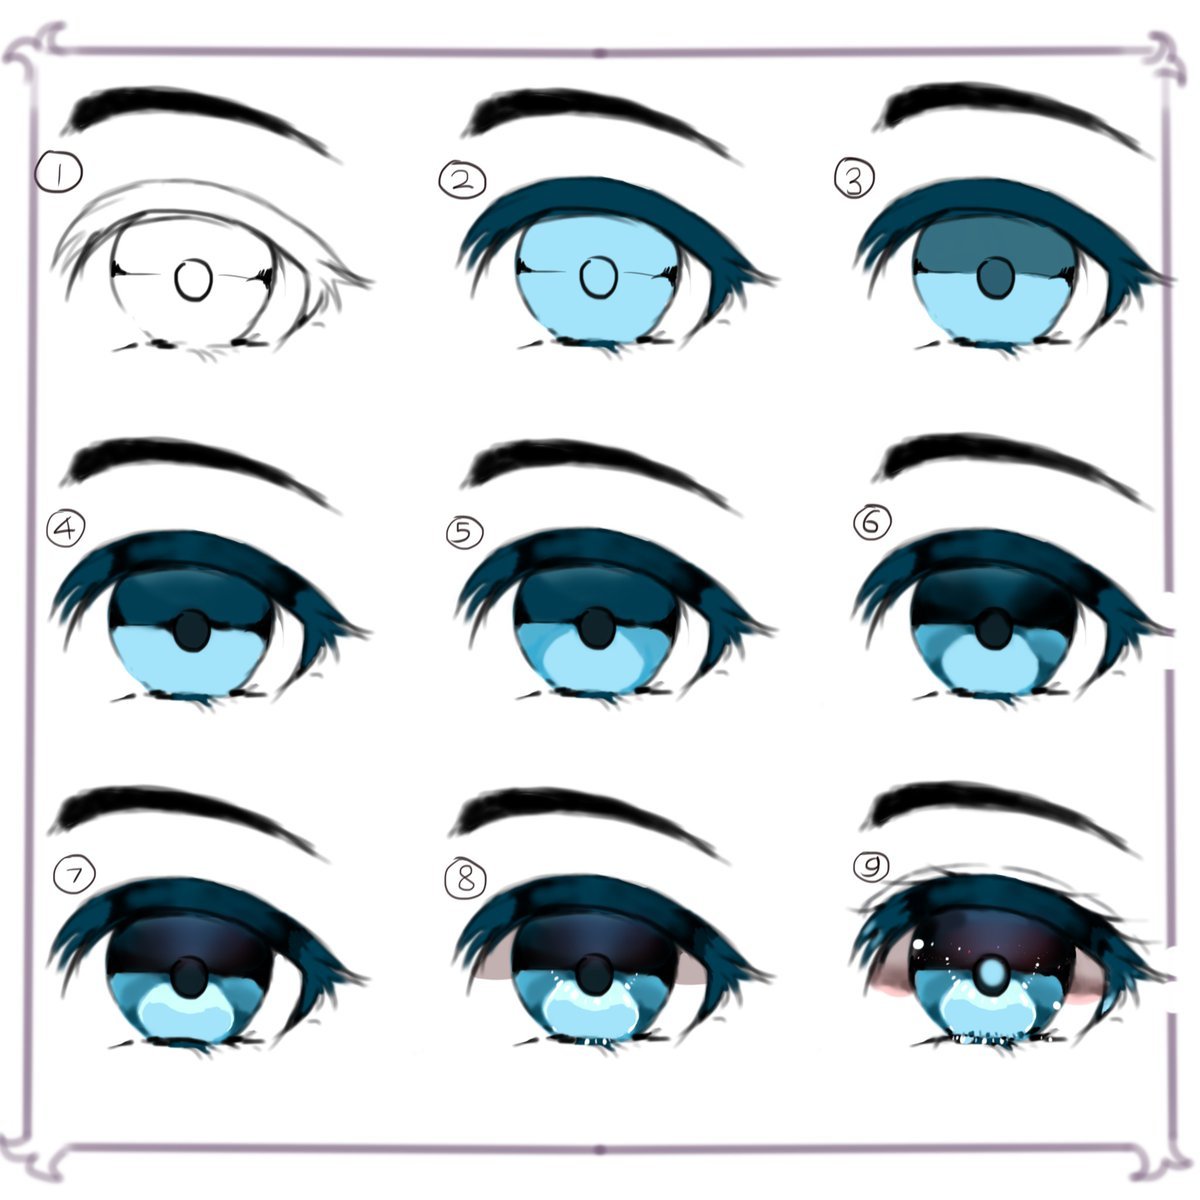 Глаза аниме персонажей - картинки, фото и рисунки.